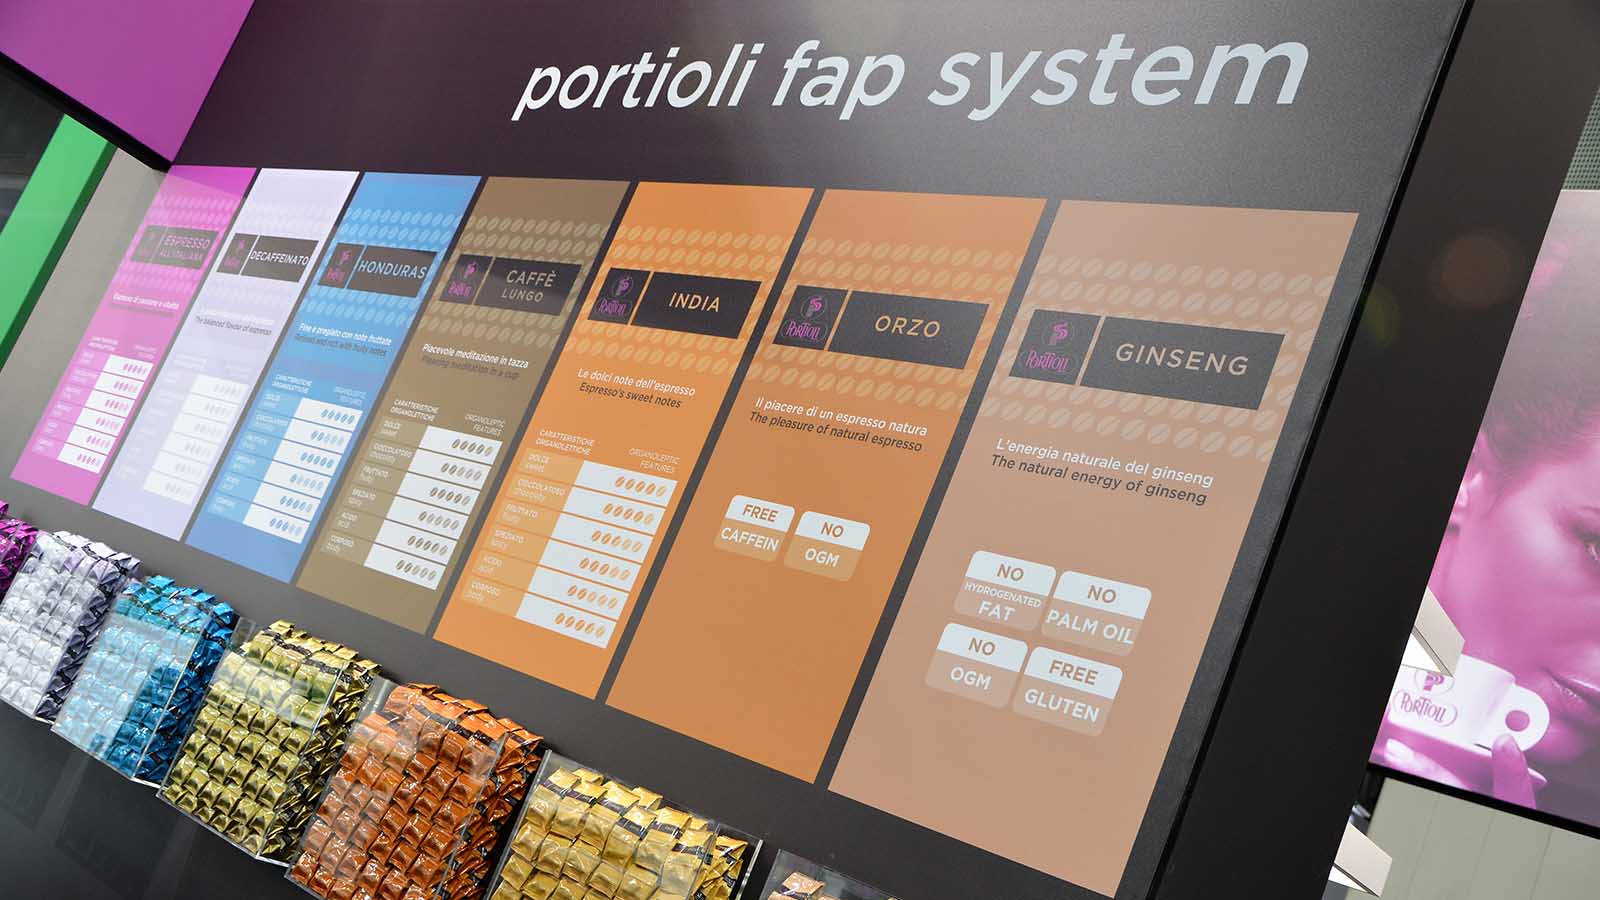 portioli-host-2017-fap-system